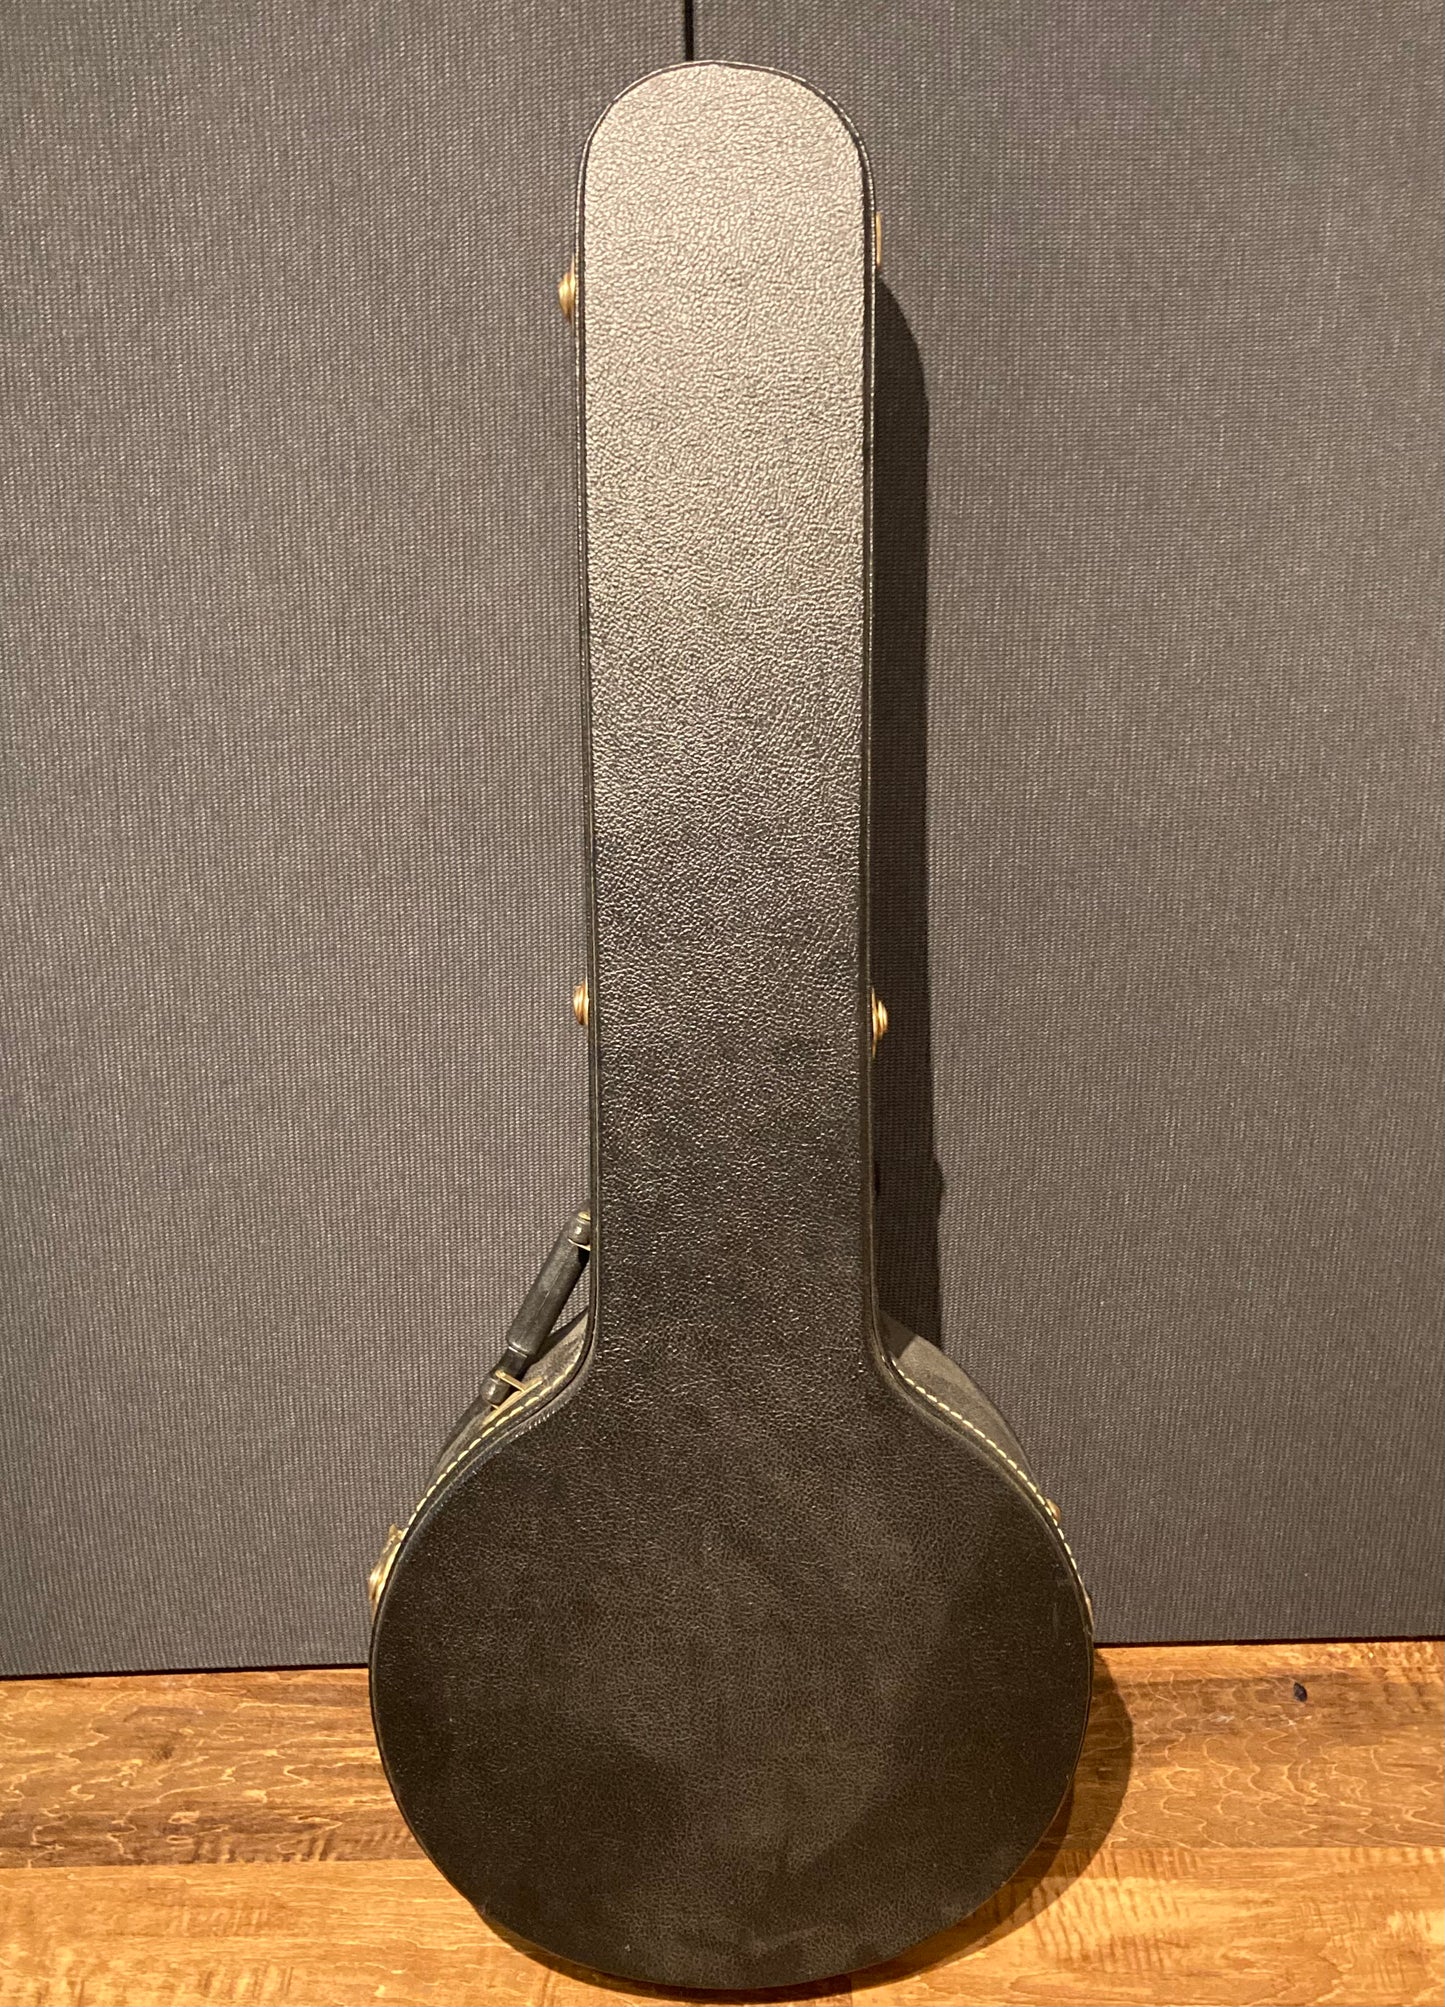 Lida Model 235 Masterclone Banjo w/Case (1976)